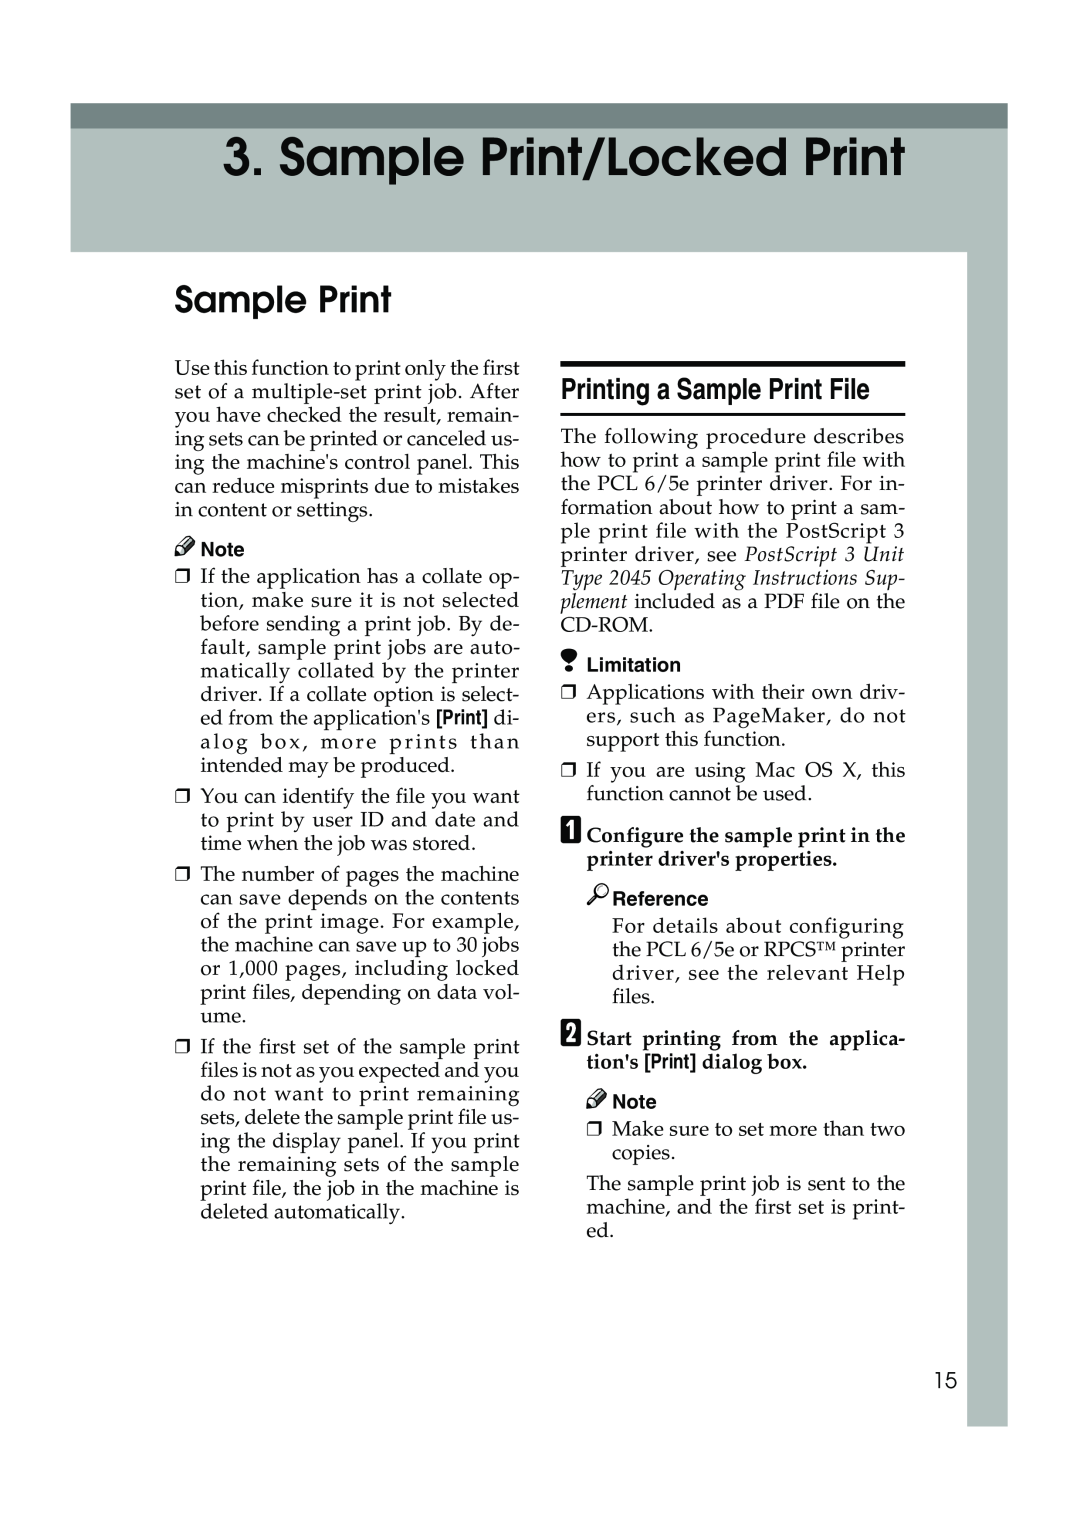 Xerox 2045e appendix Sample Print/Locked Print, Printing a Sample Print File, Limitation, Reference 